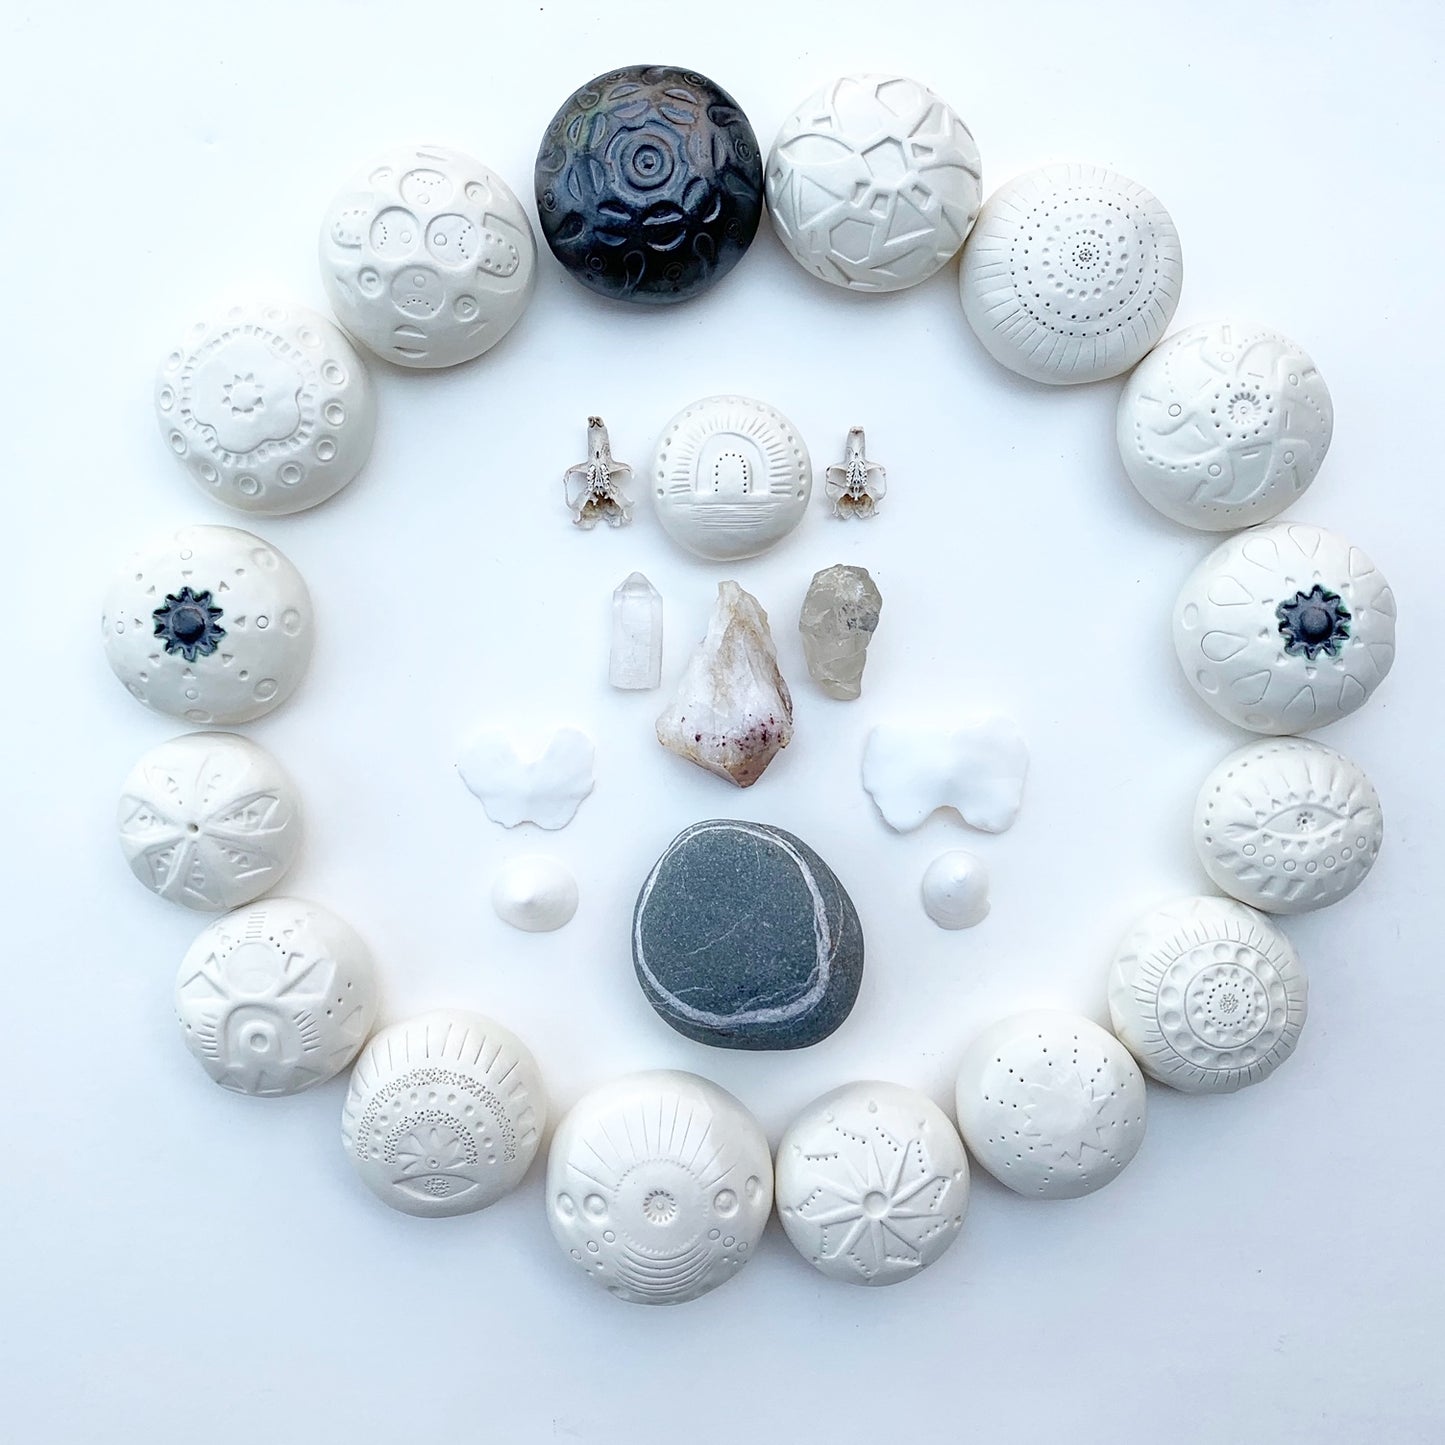 sold - meditation sculptures / one of a kind ceramics for sacred spaces